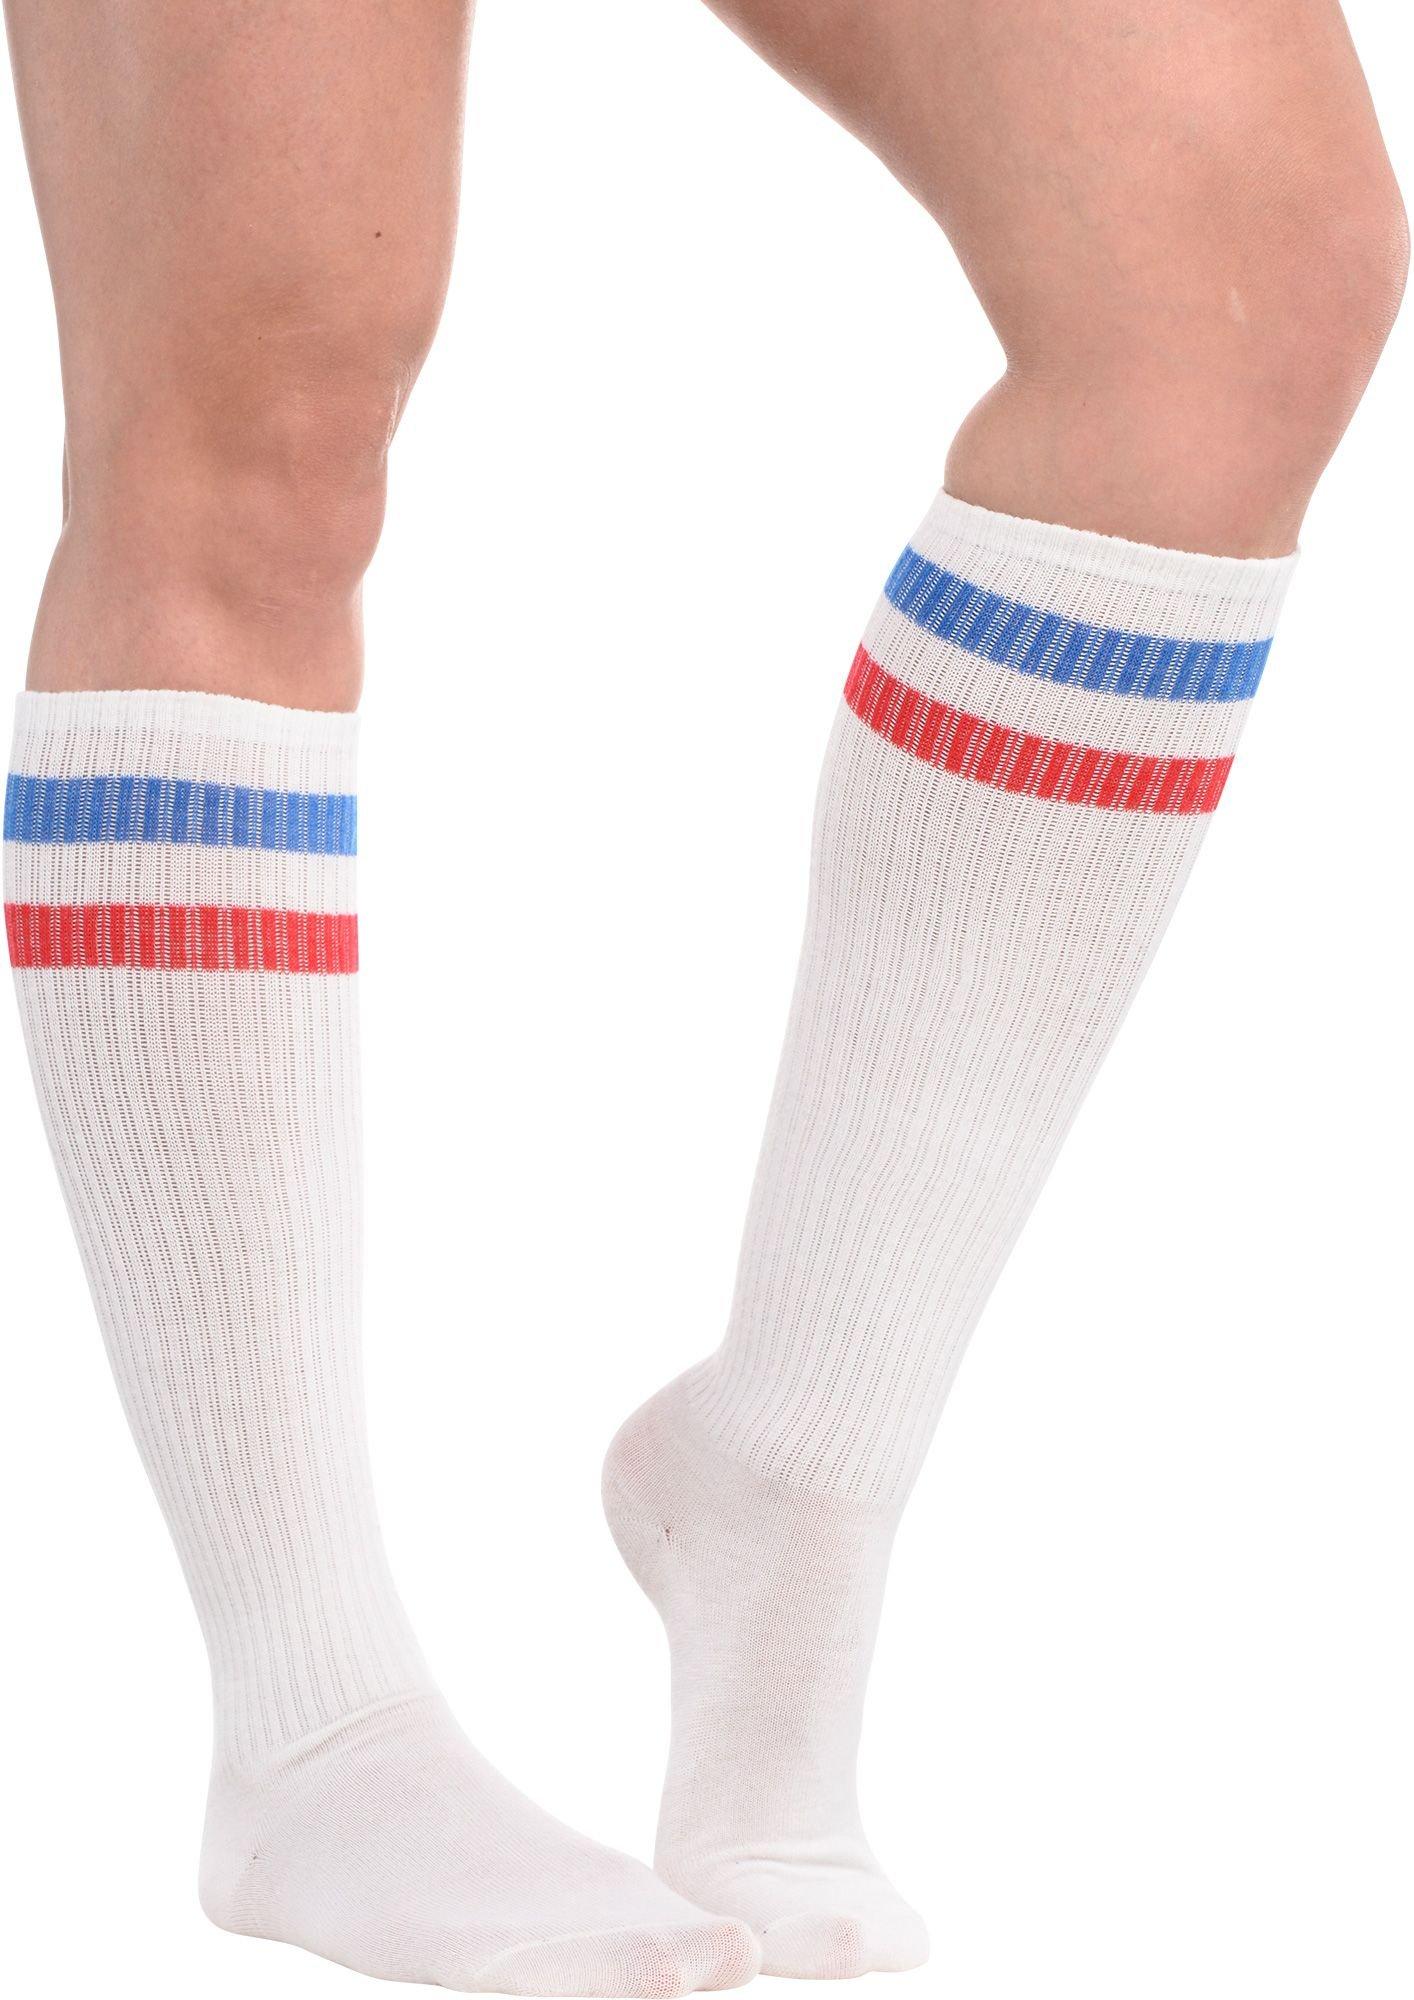 Leg Avenue Women's Athletic Striped Knee High Socks, White/Blue, One Size